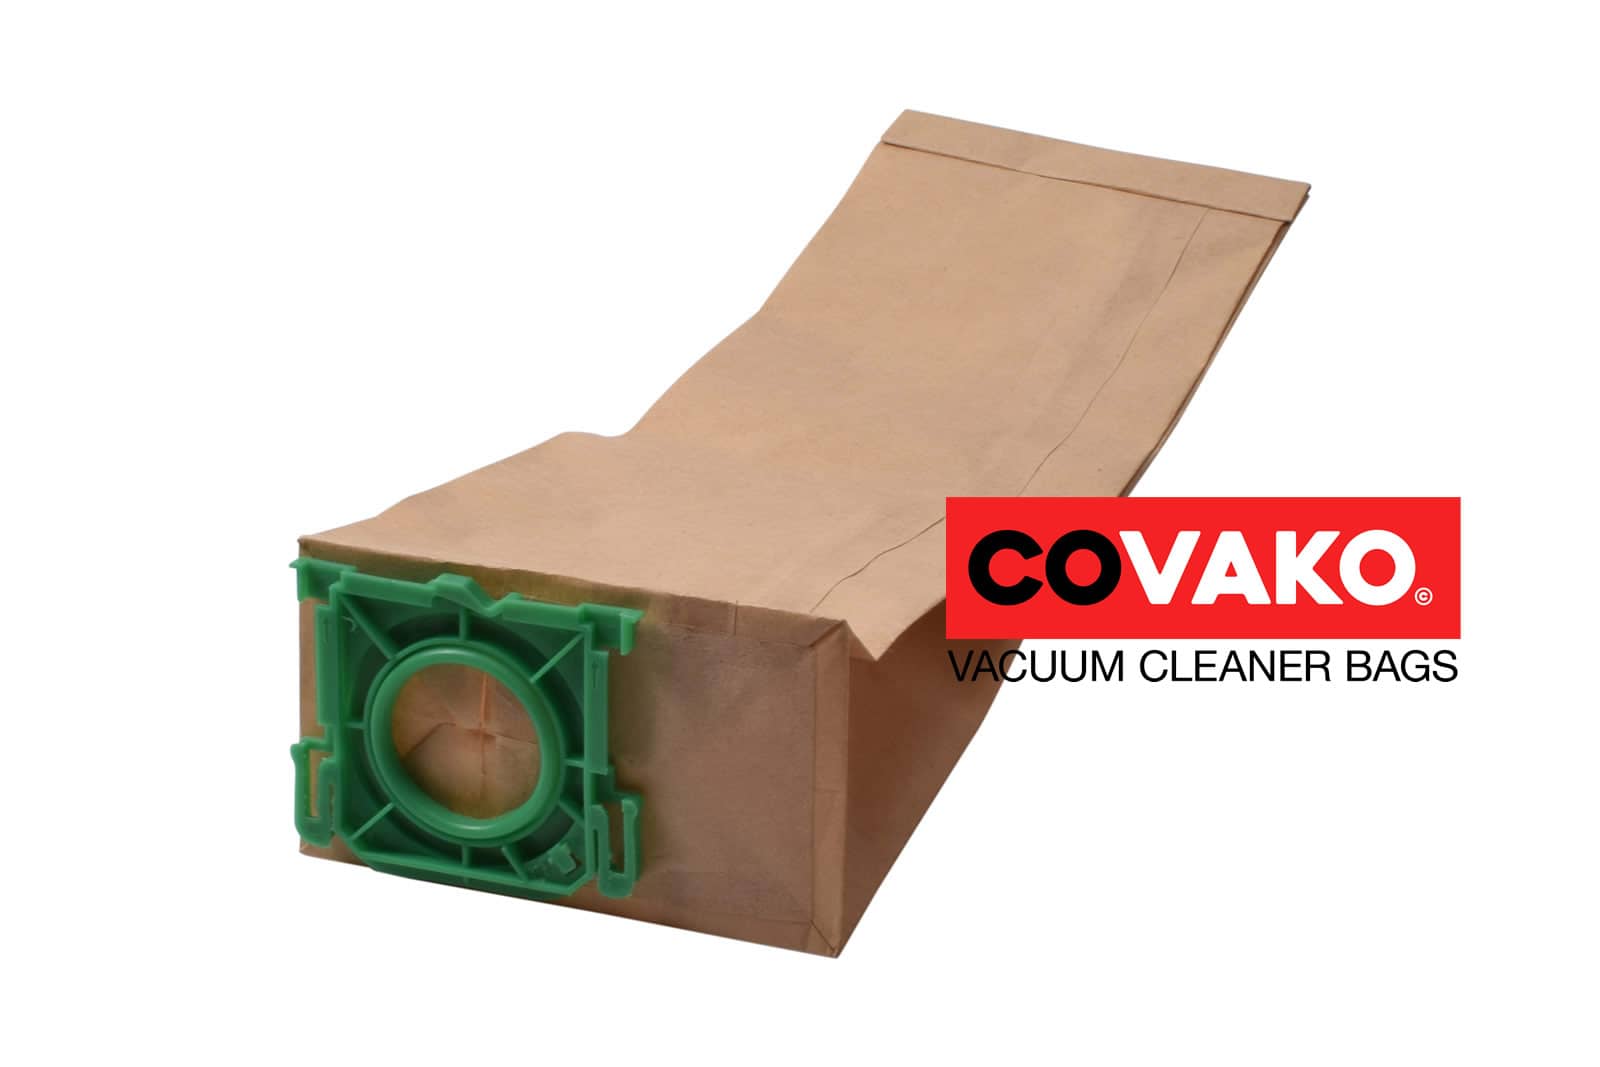 Columbus XP 3 / Paper - Columbus vacuum cleaner bags